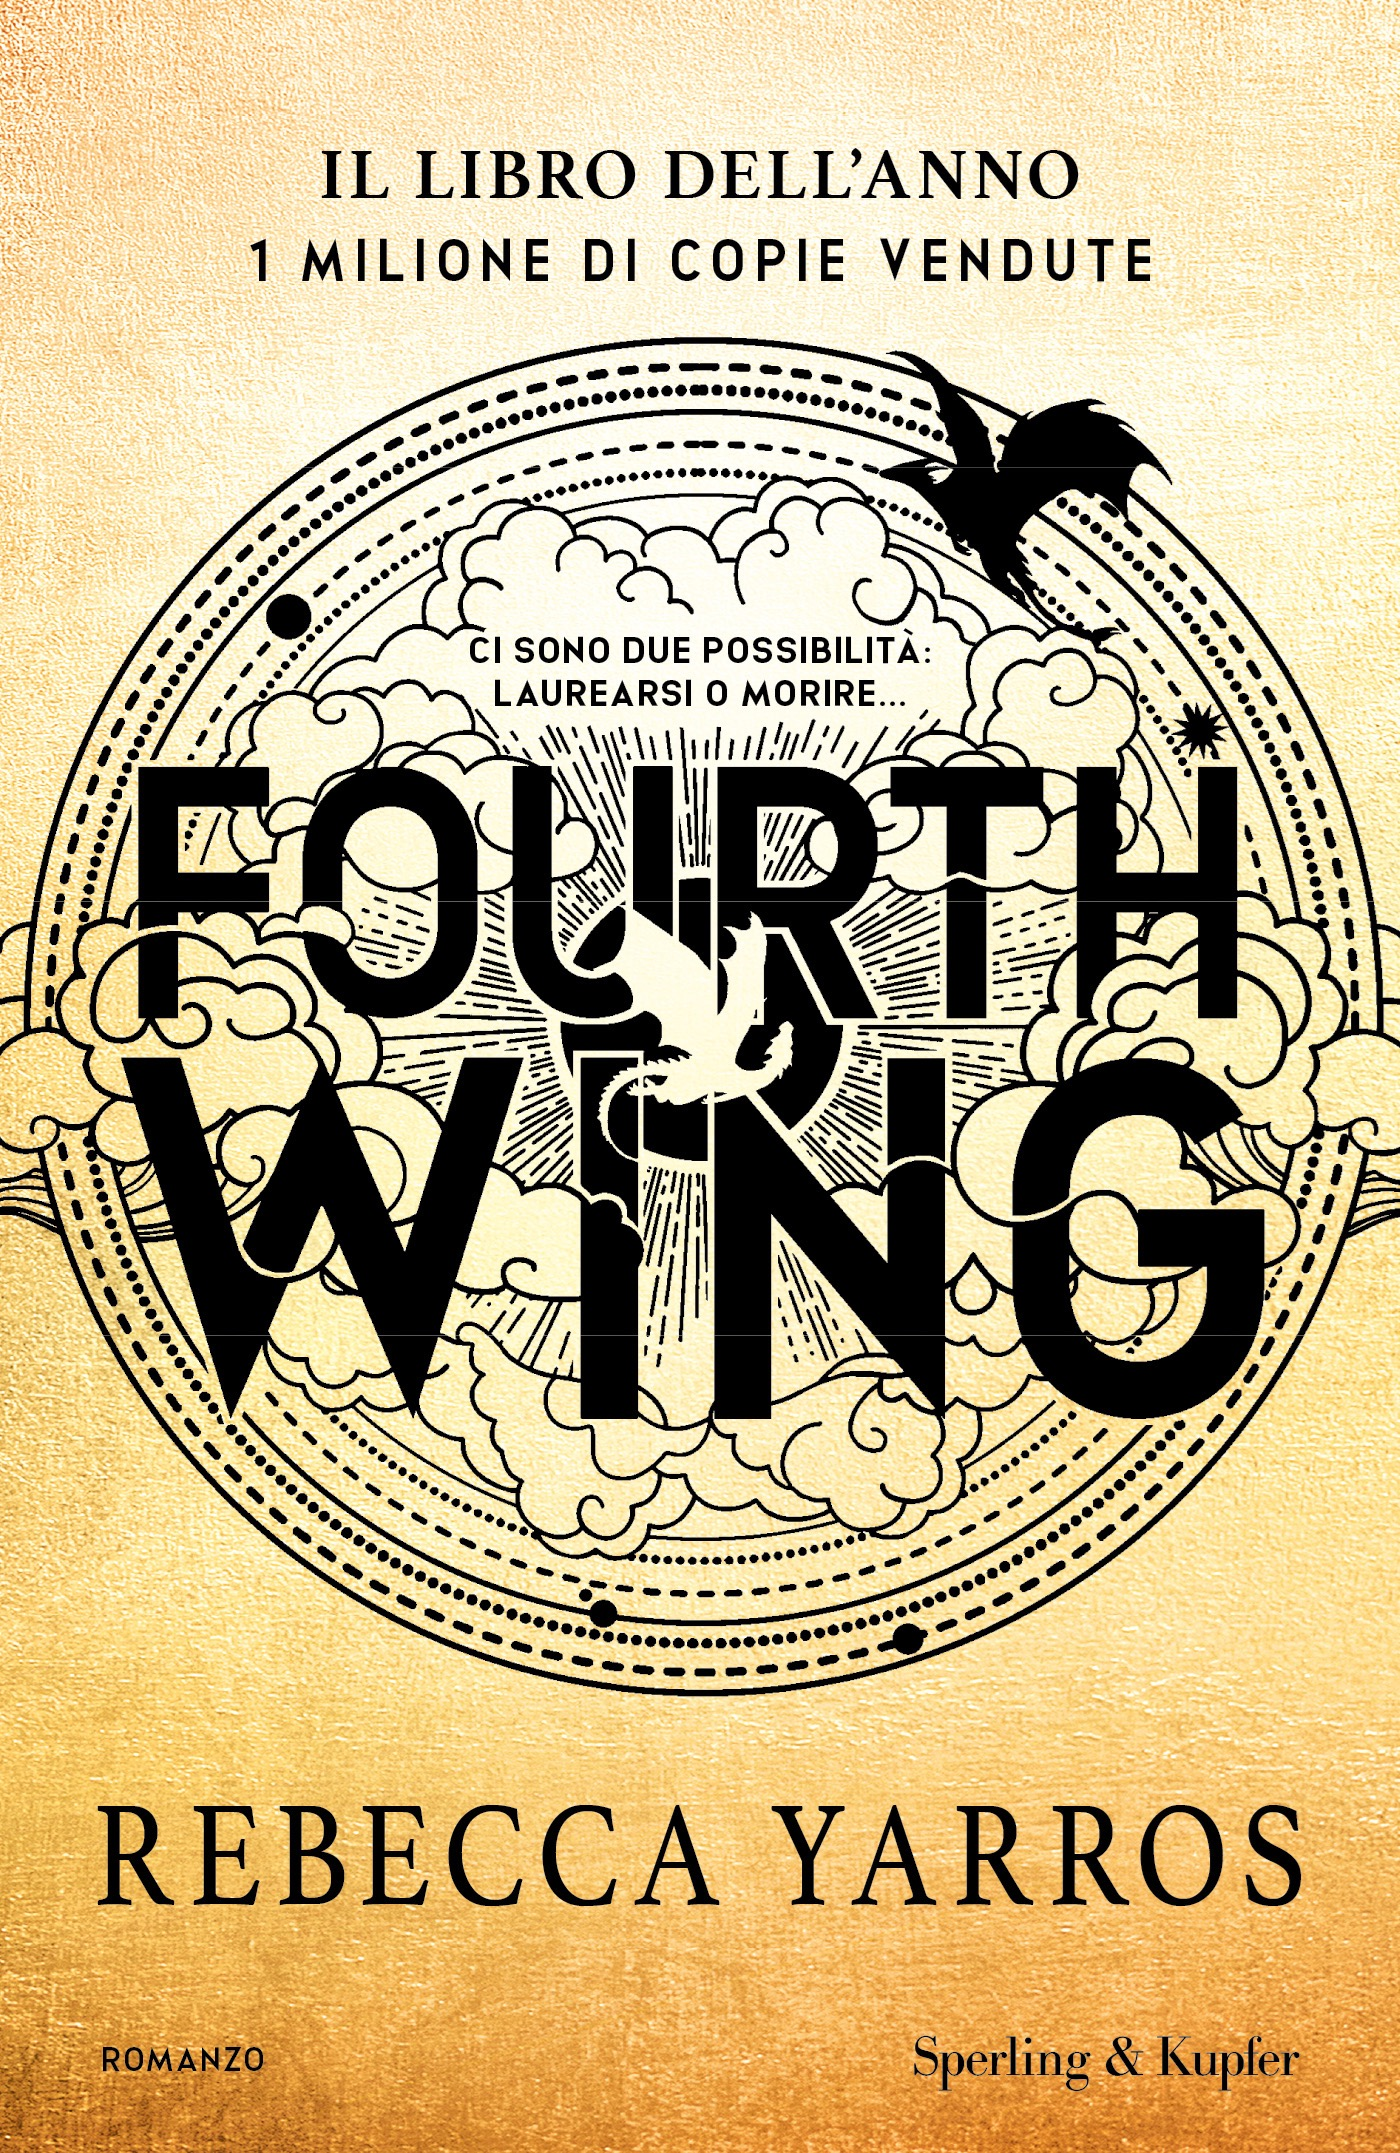 Fourth Wing. Ediz. speciale: Vol. 1 - Rebecca Yarros - Sperling & Kupfer